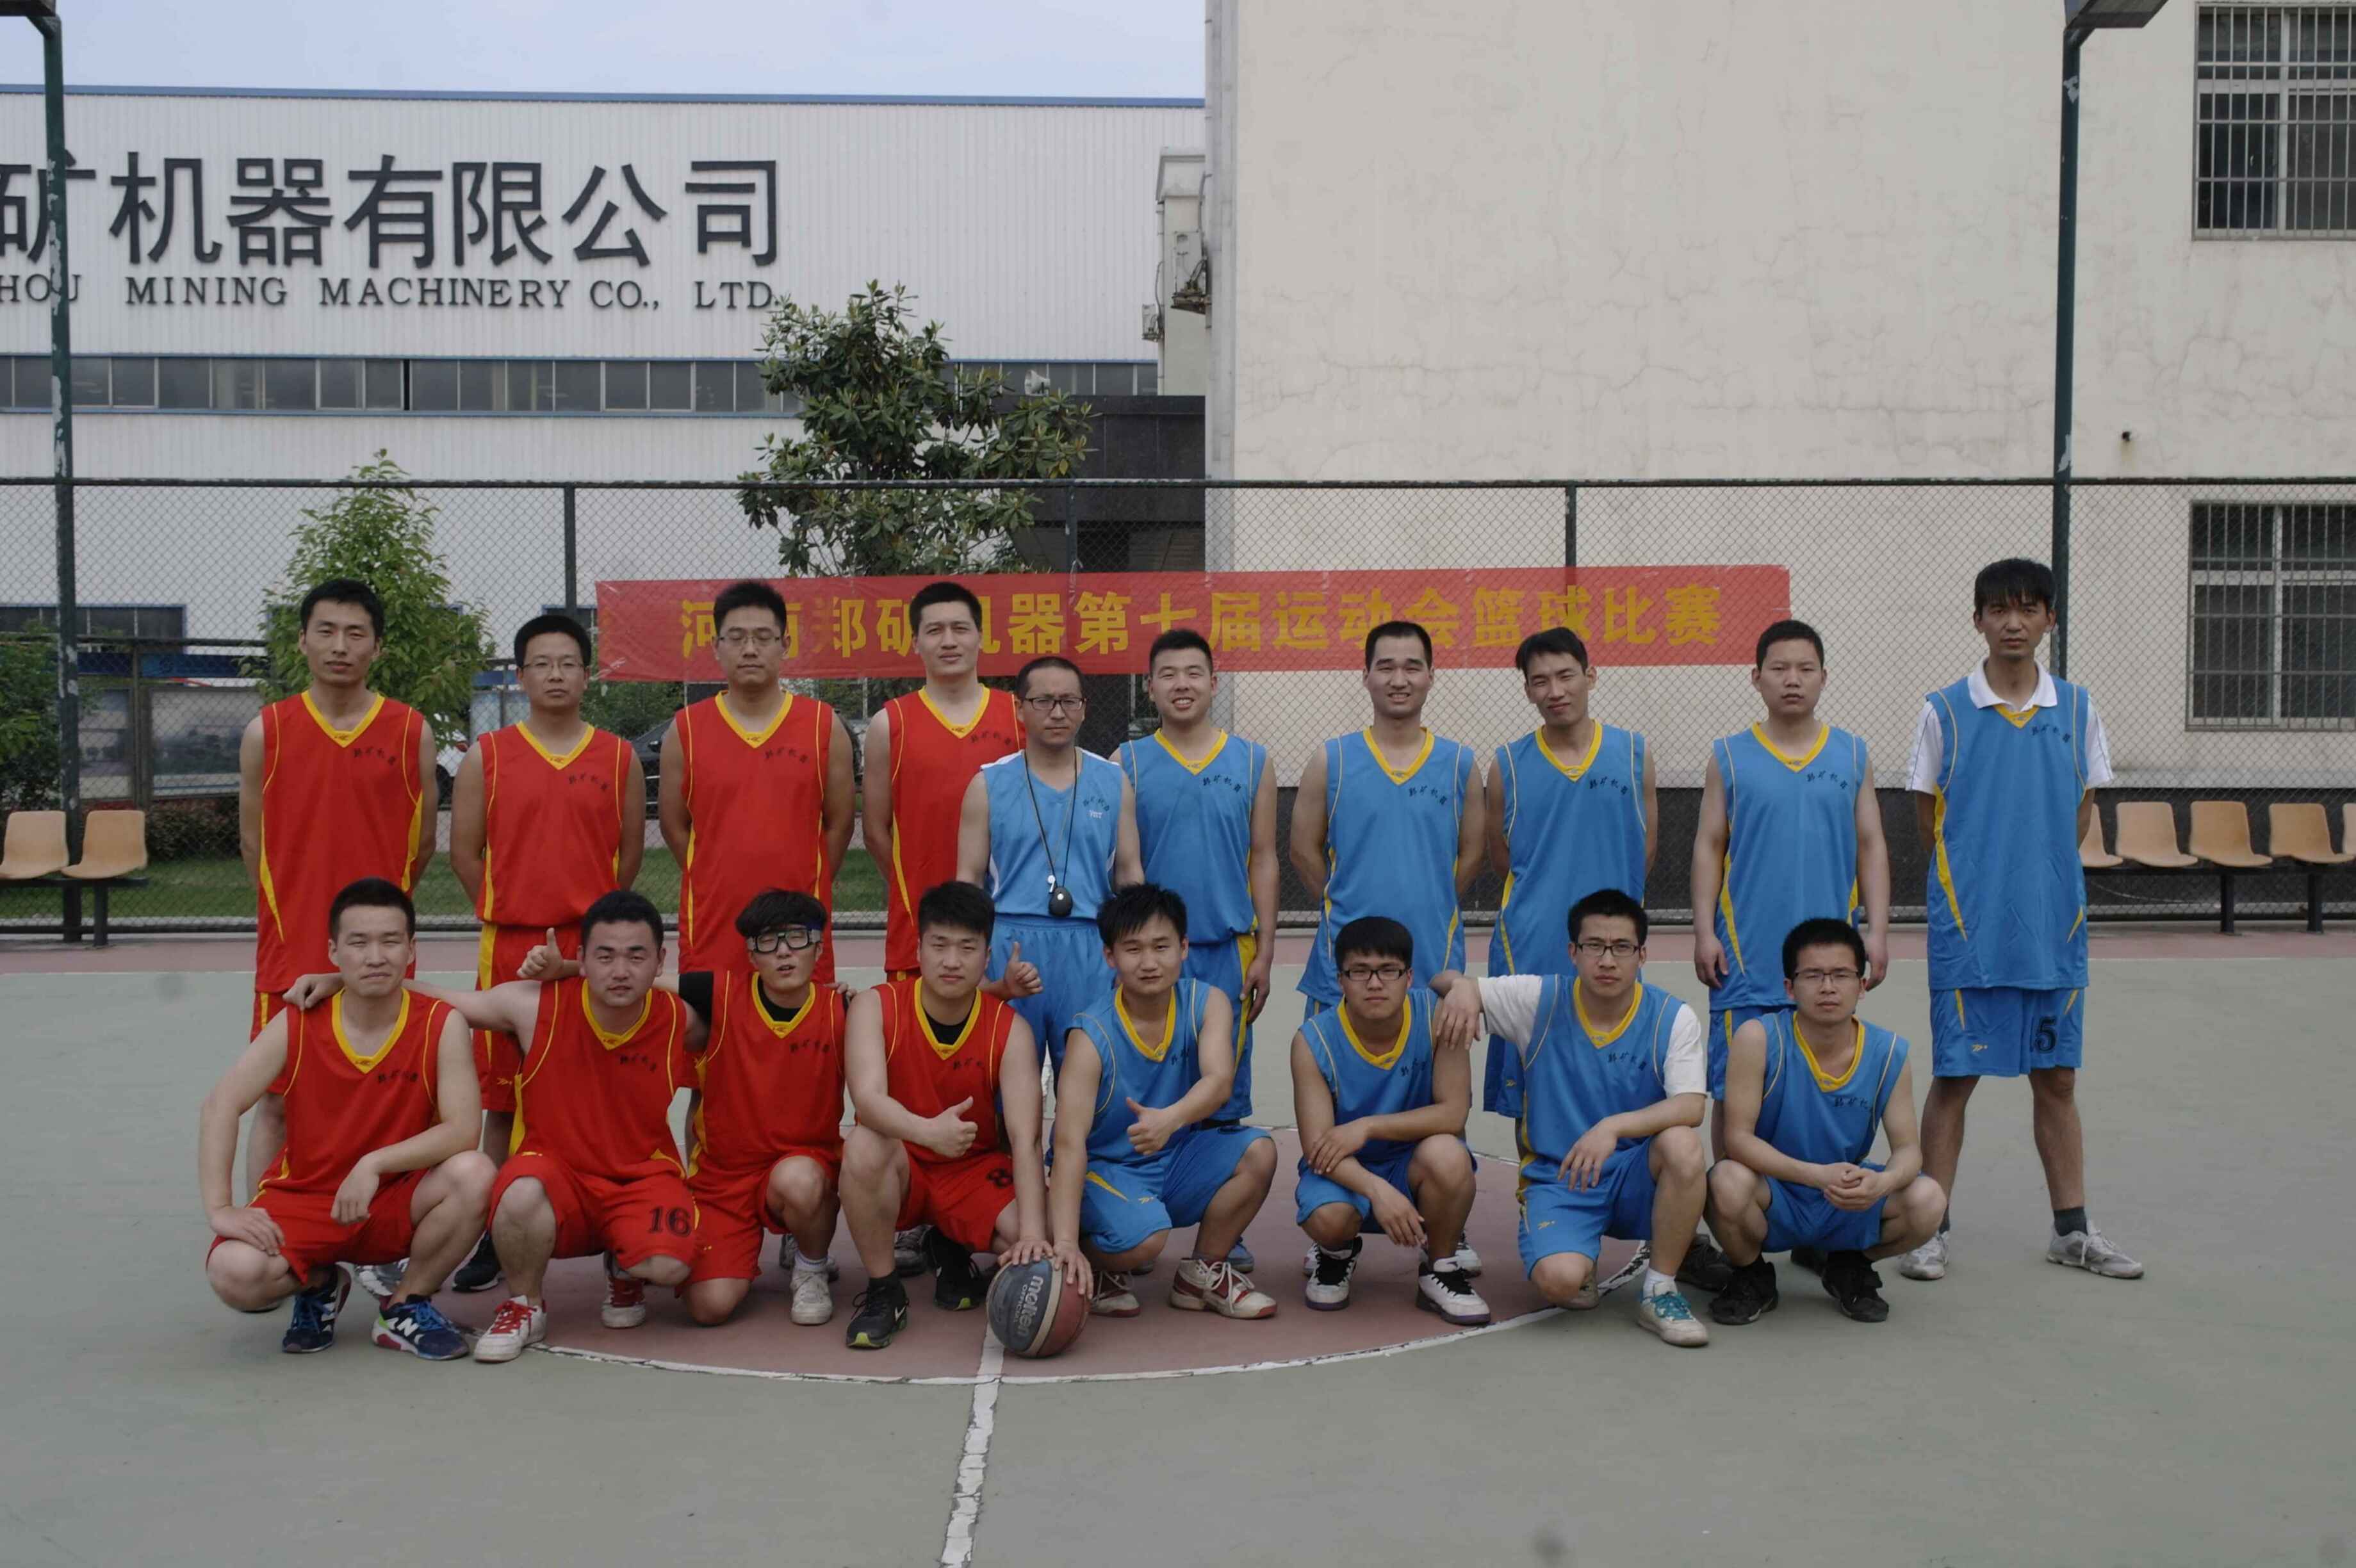 The 8th Sport Games of Henan Zhengzhou Mining Machinery Co., Ltd. Kicked Off